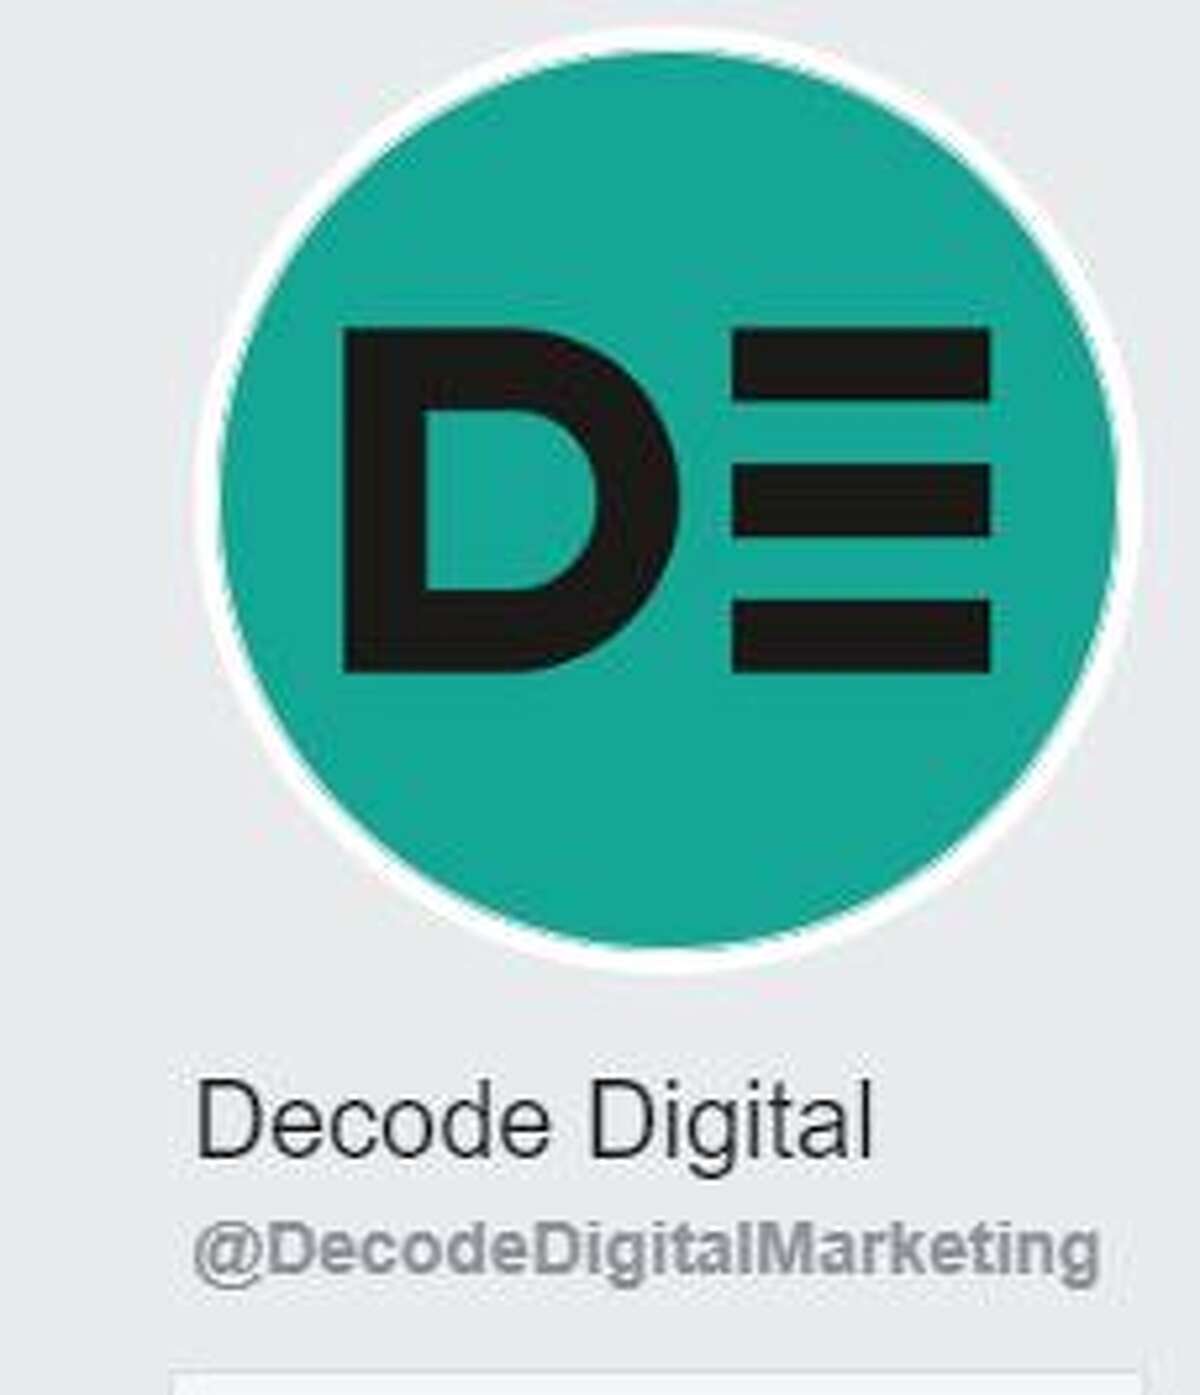 No. 973: Decode Digital Marketing/437%/$7.3 million